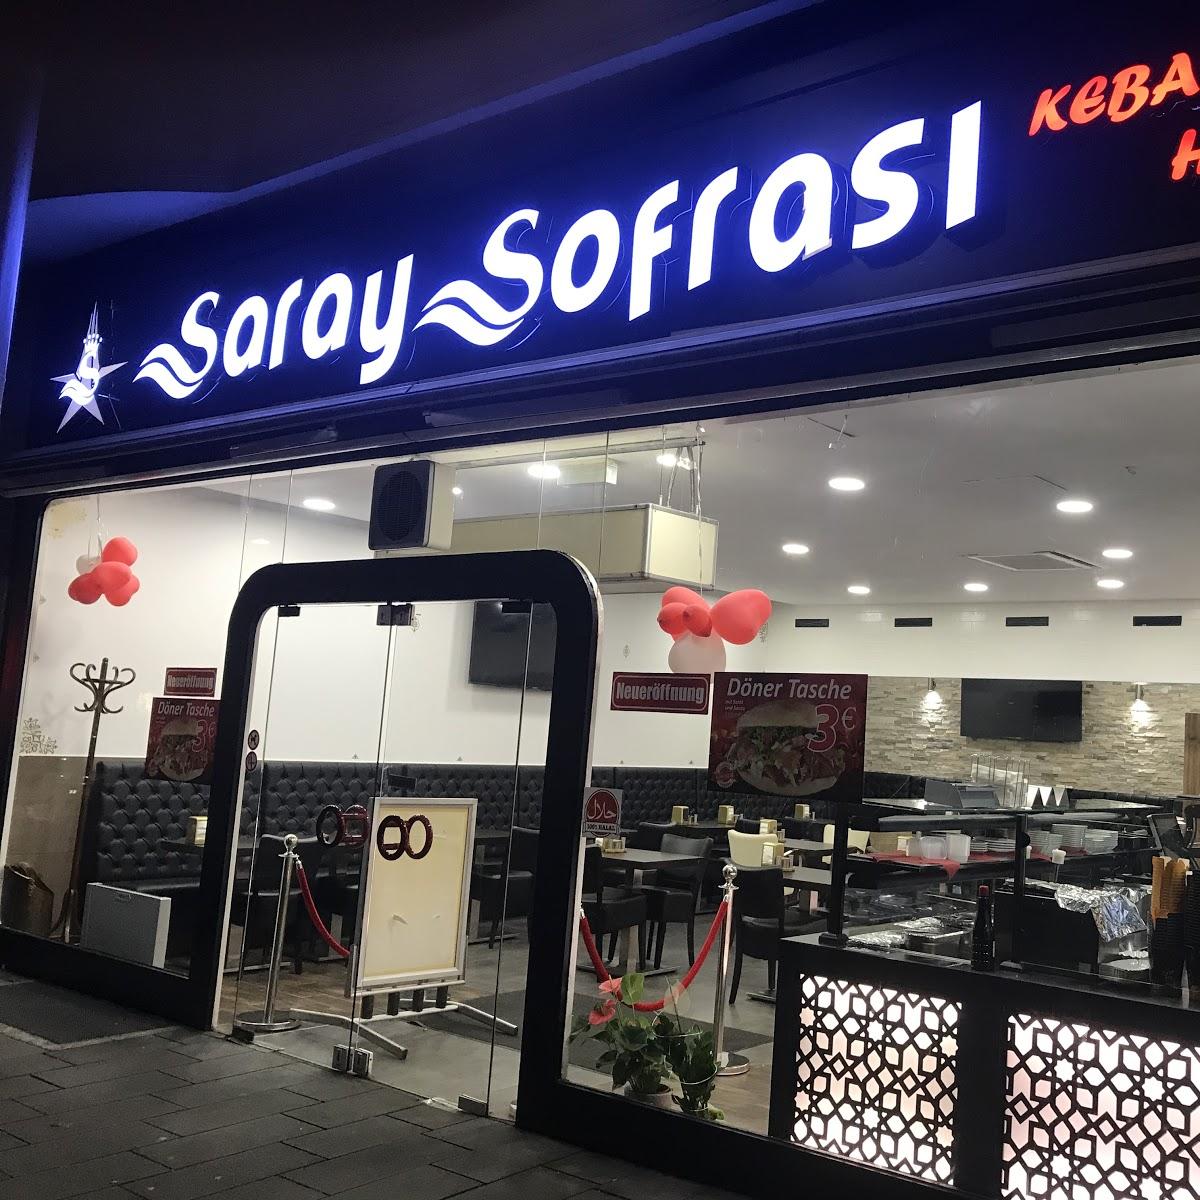 Restaurant "Saray Sofrasi" in Bochum